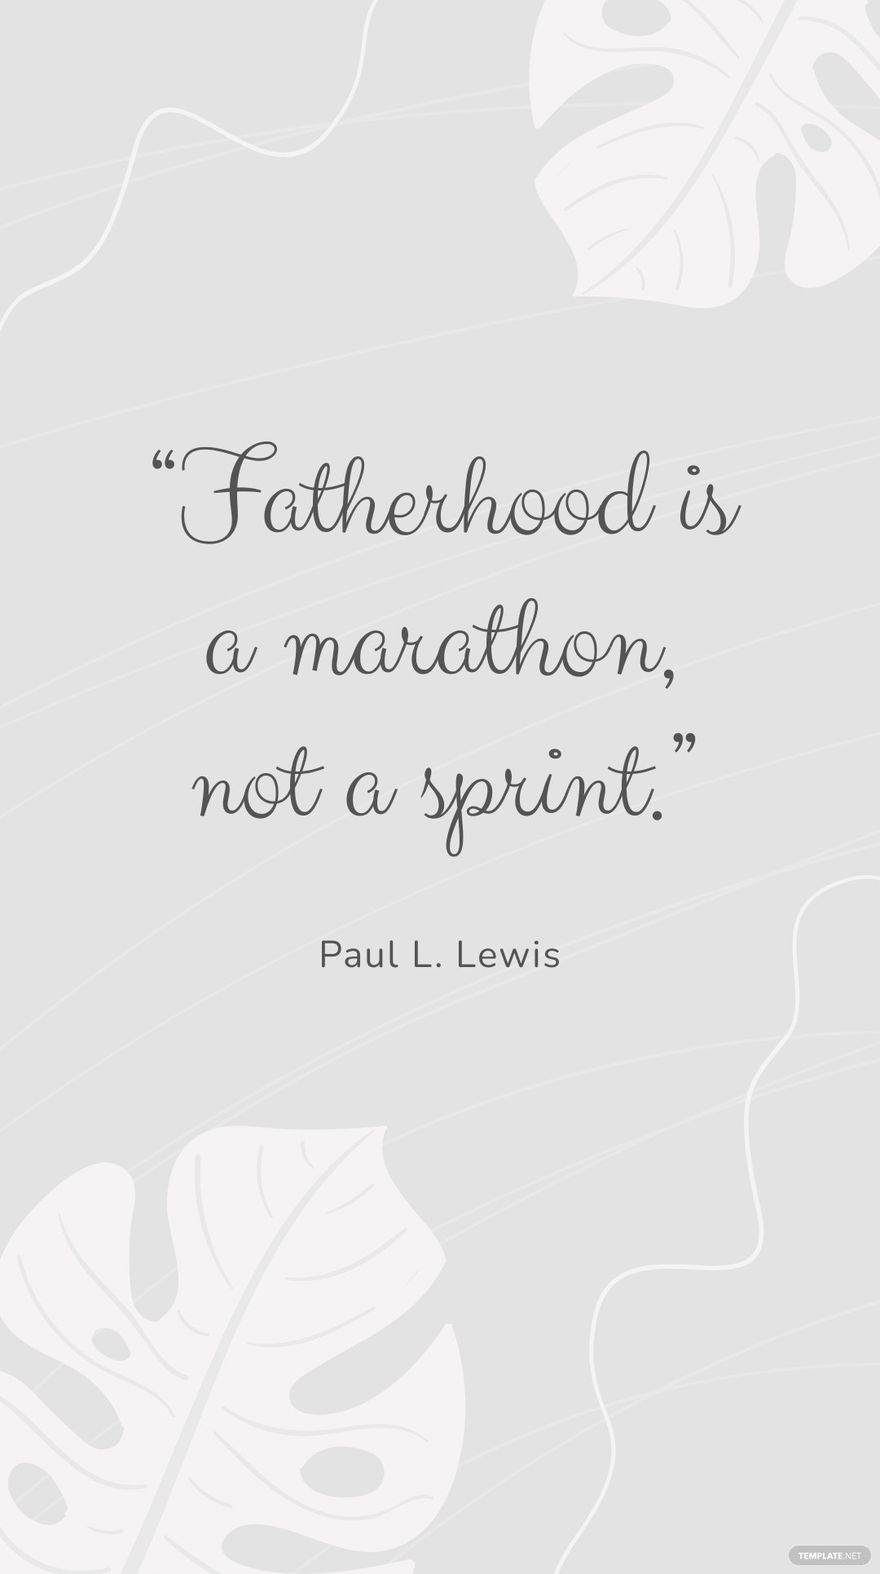 Paul L. Lewis - “Fatherhood is a marathon, not a sprint.” in JPG